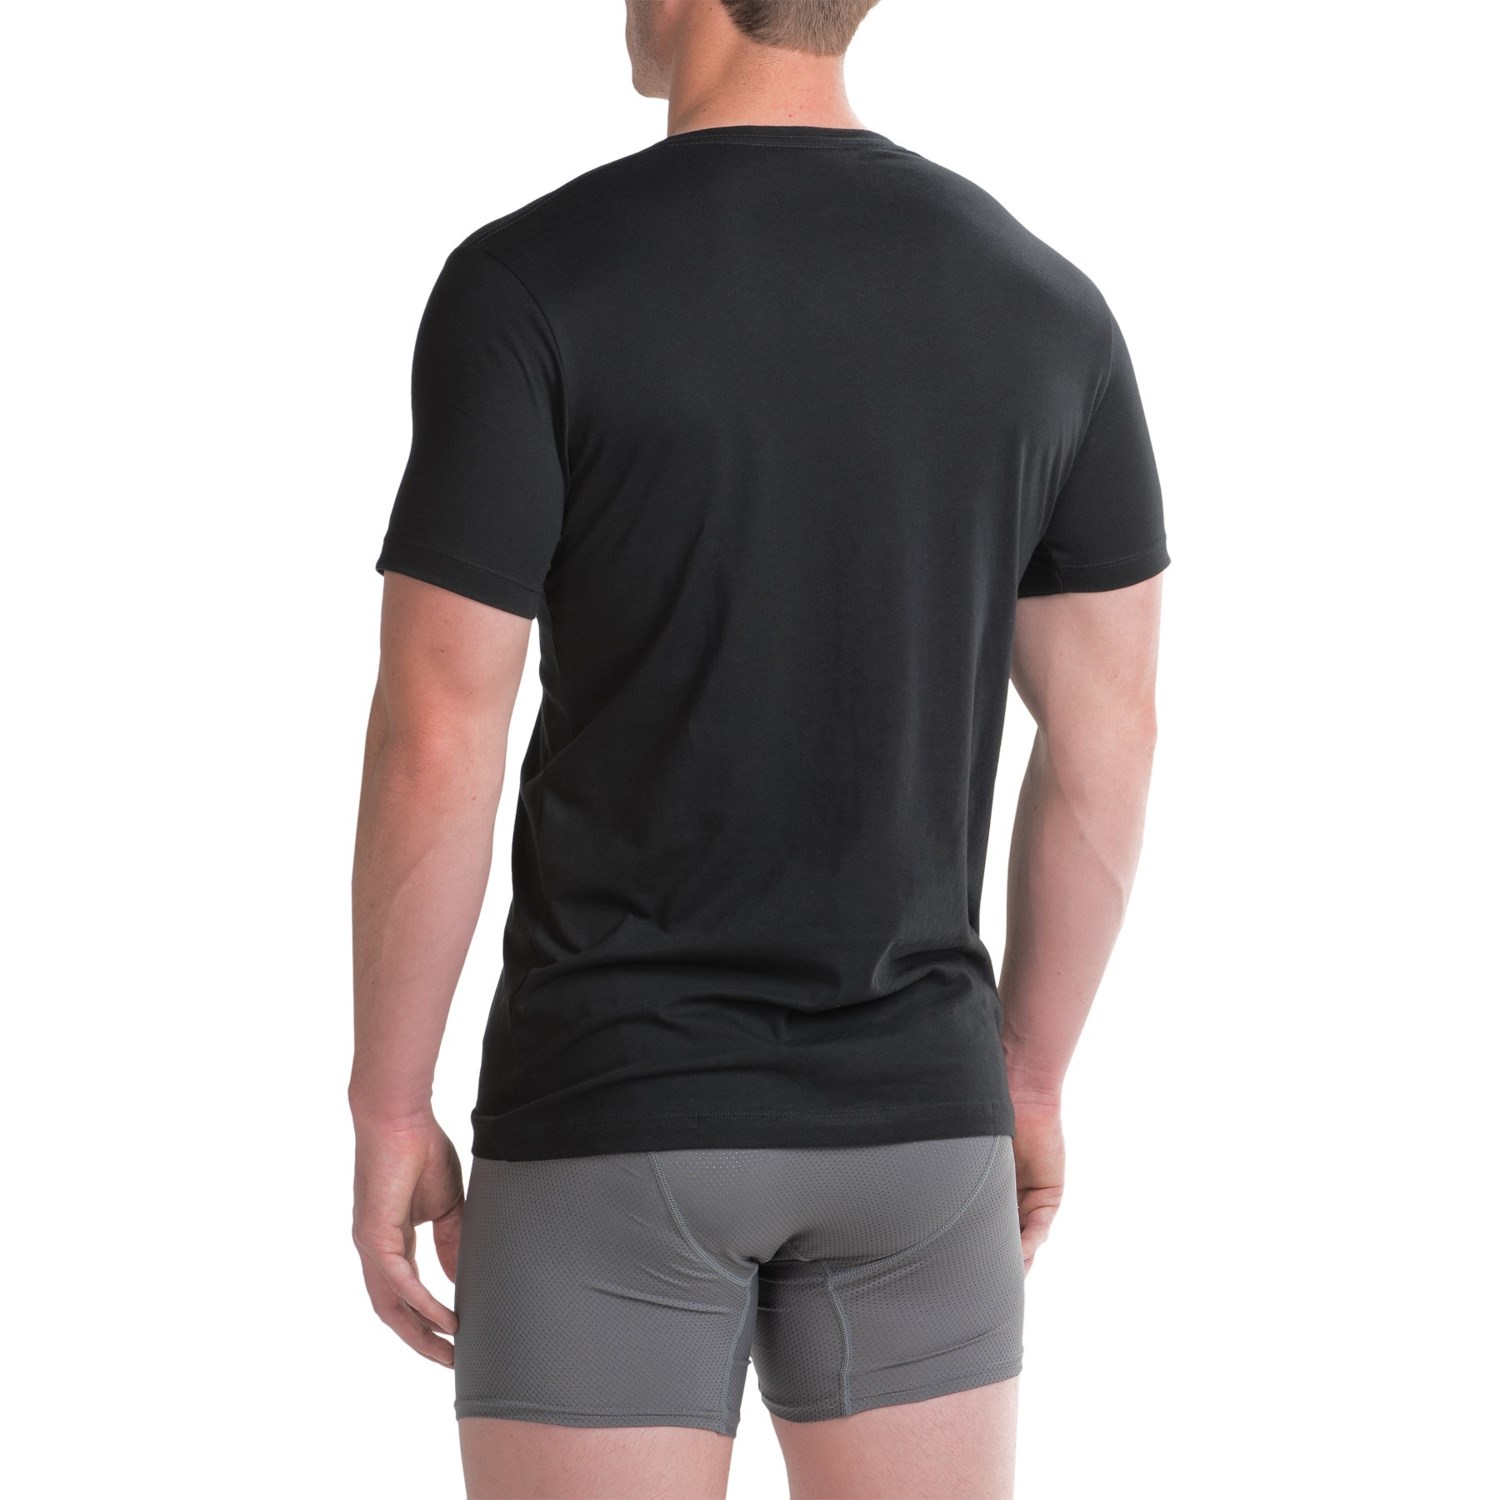 Ragman Pima Cotton Crew Neck Undershirts (For Men) - Save 45%